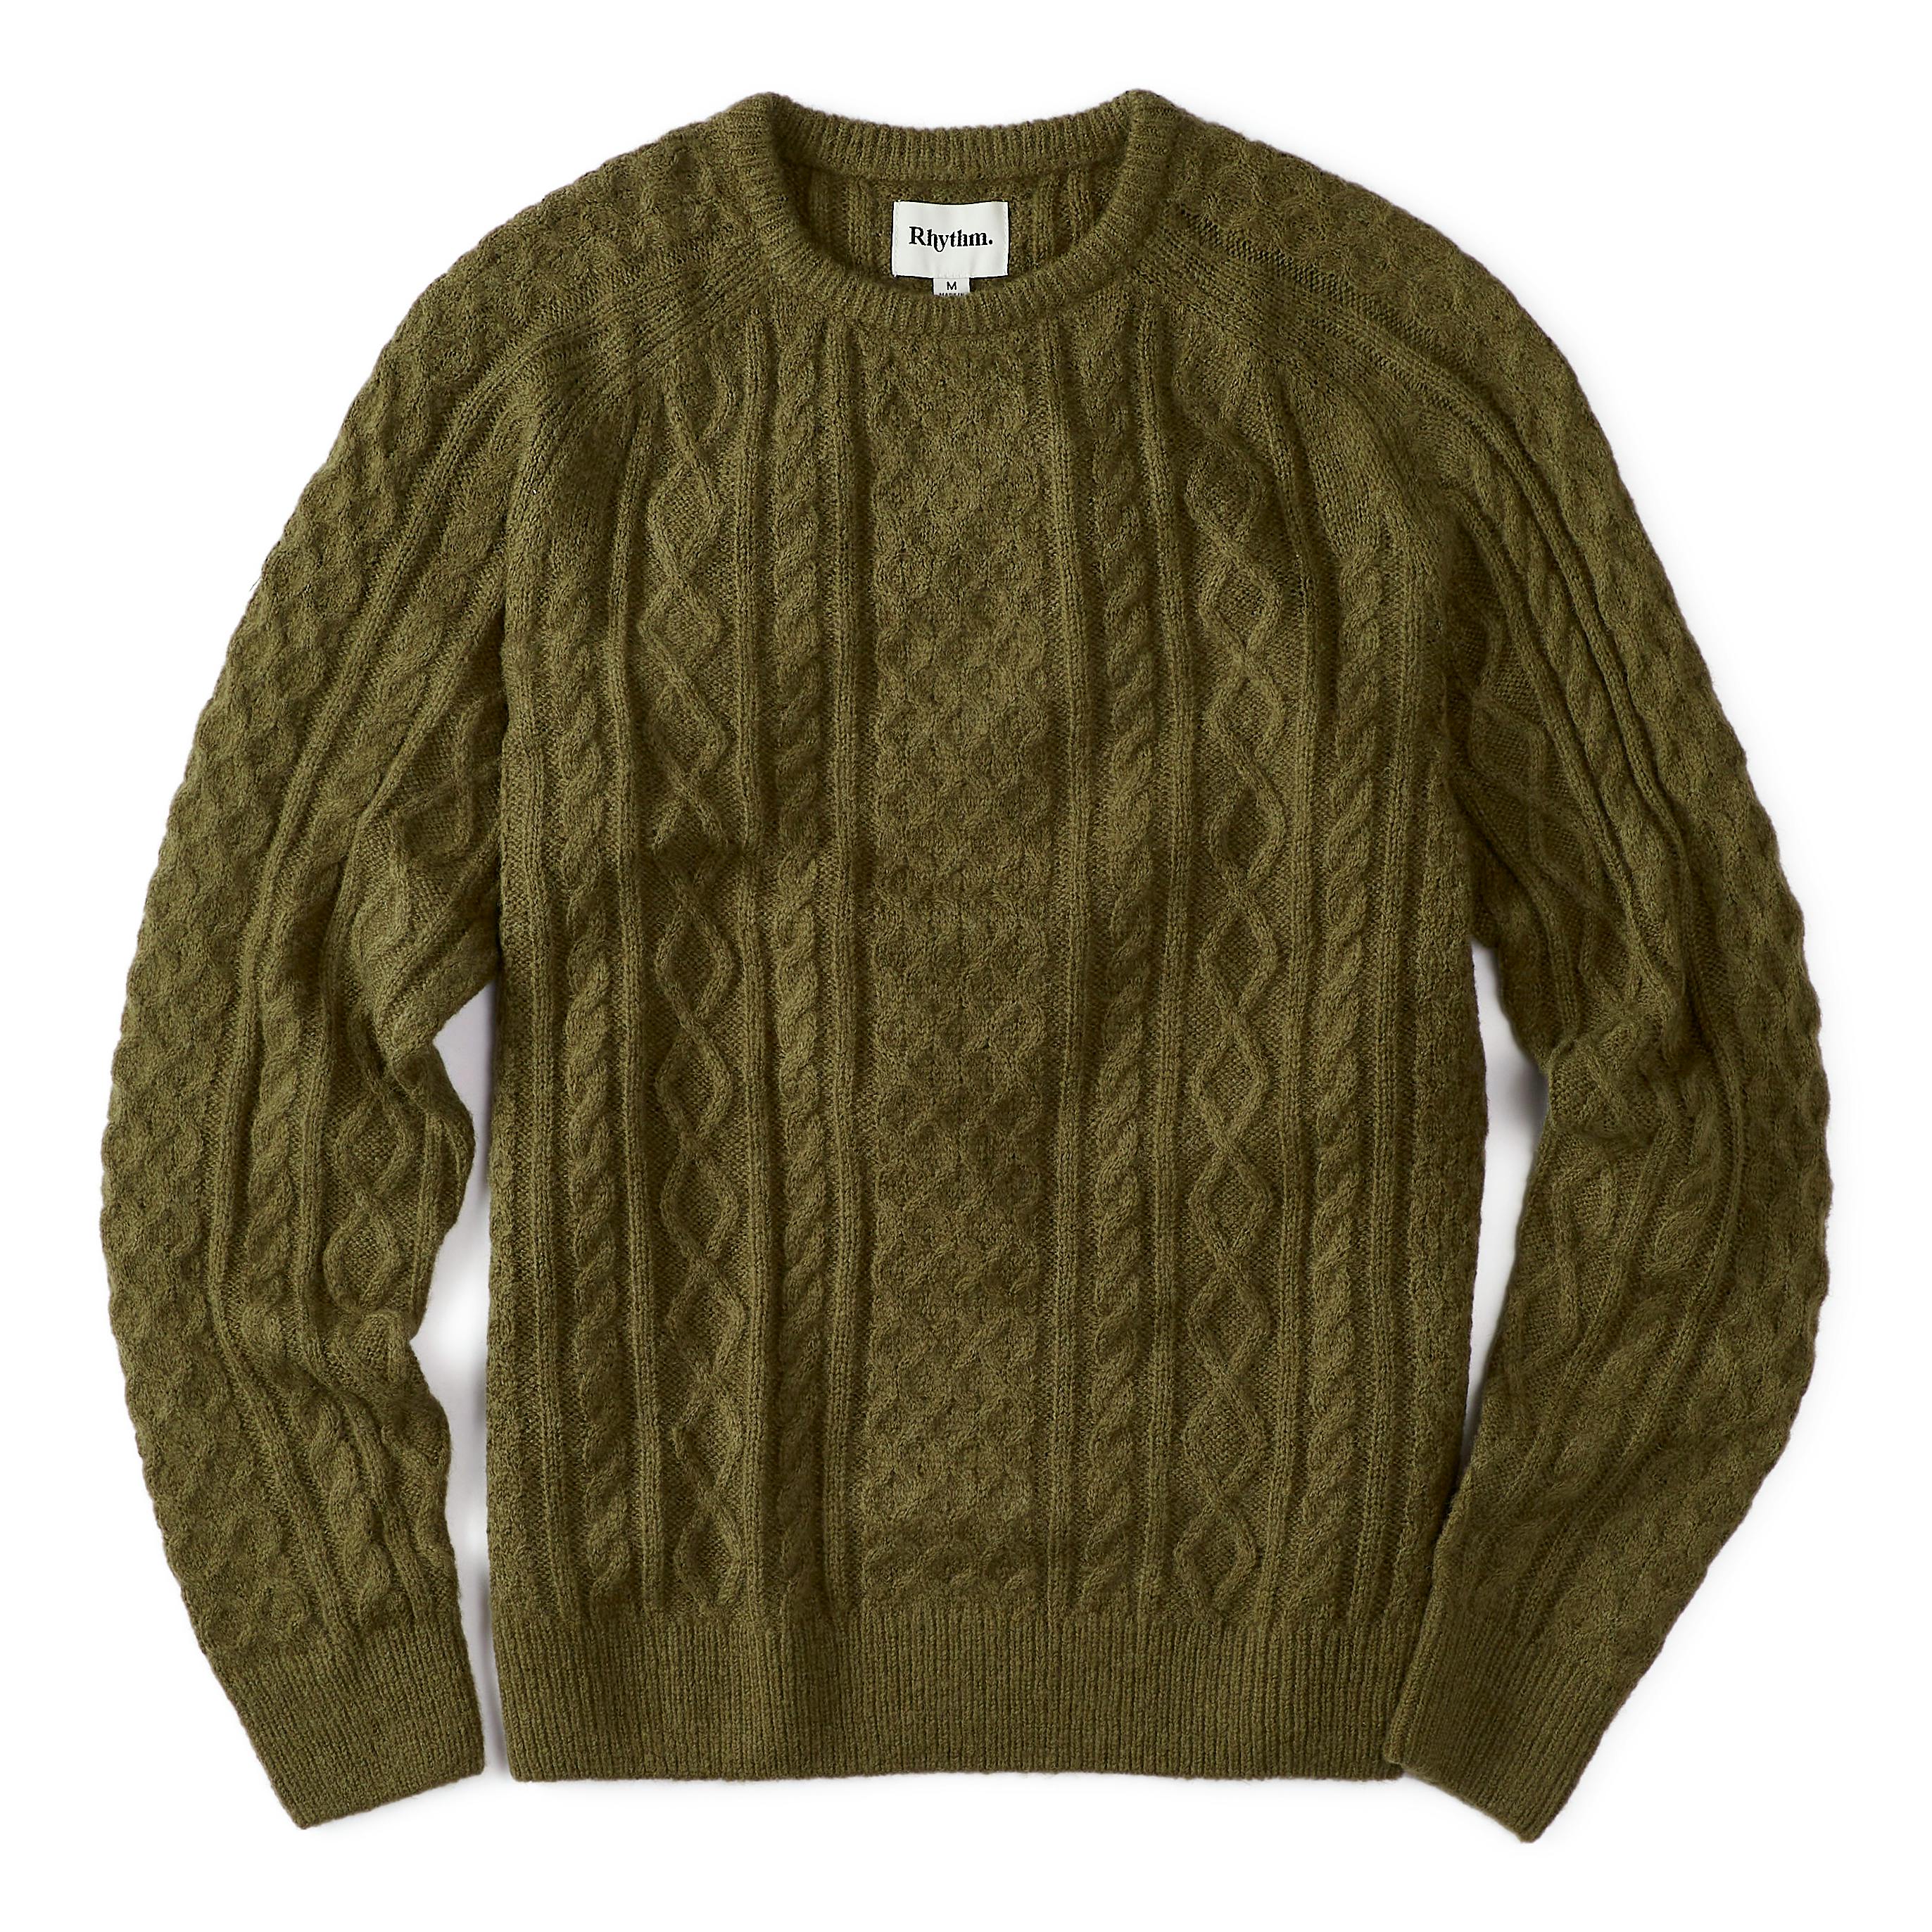 Rhythm Mohair Fisherman Knit Sweater - Olive, Fisherman Sweaters